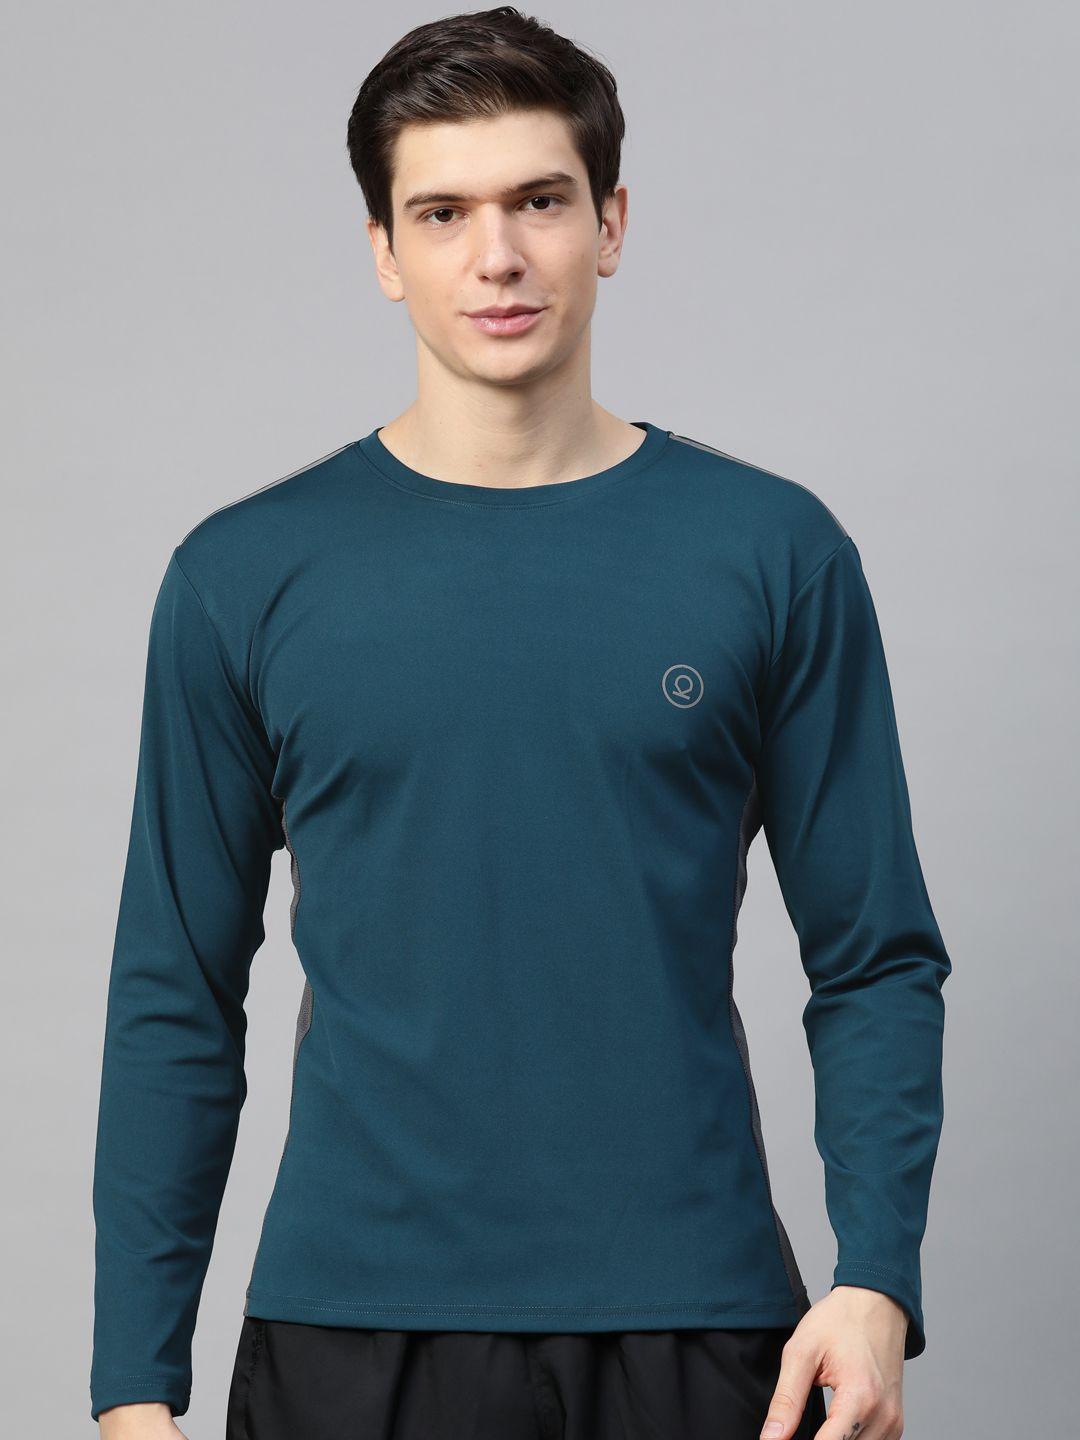 chkokko-men-teal-blue-solid-dri-fit-round-neck-gym-t-shirt